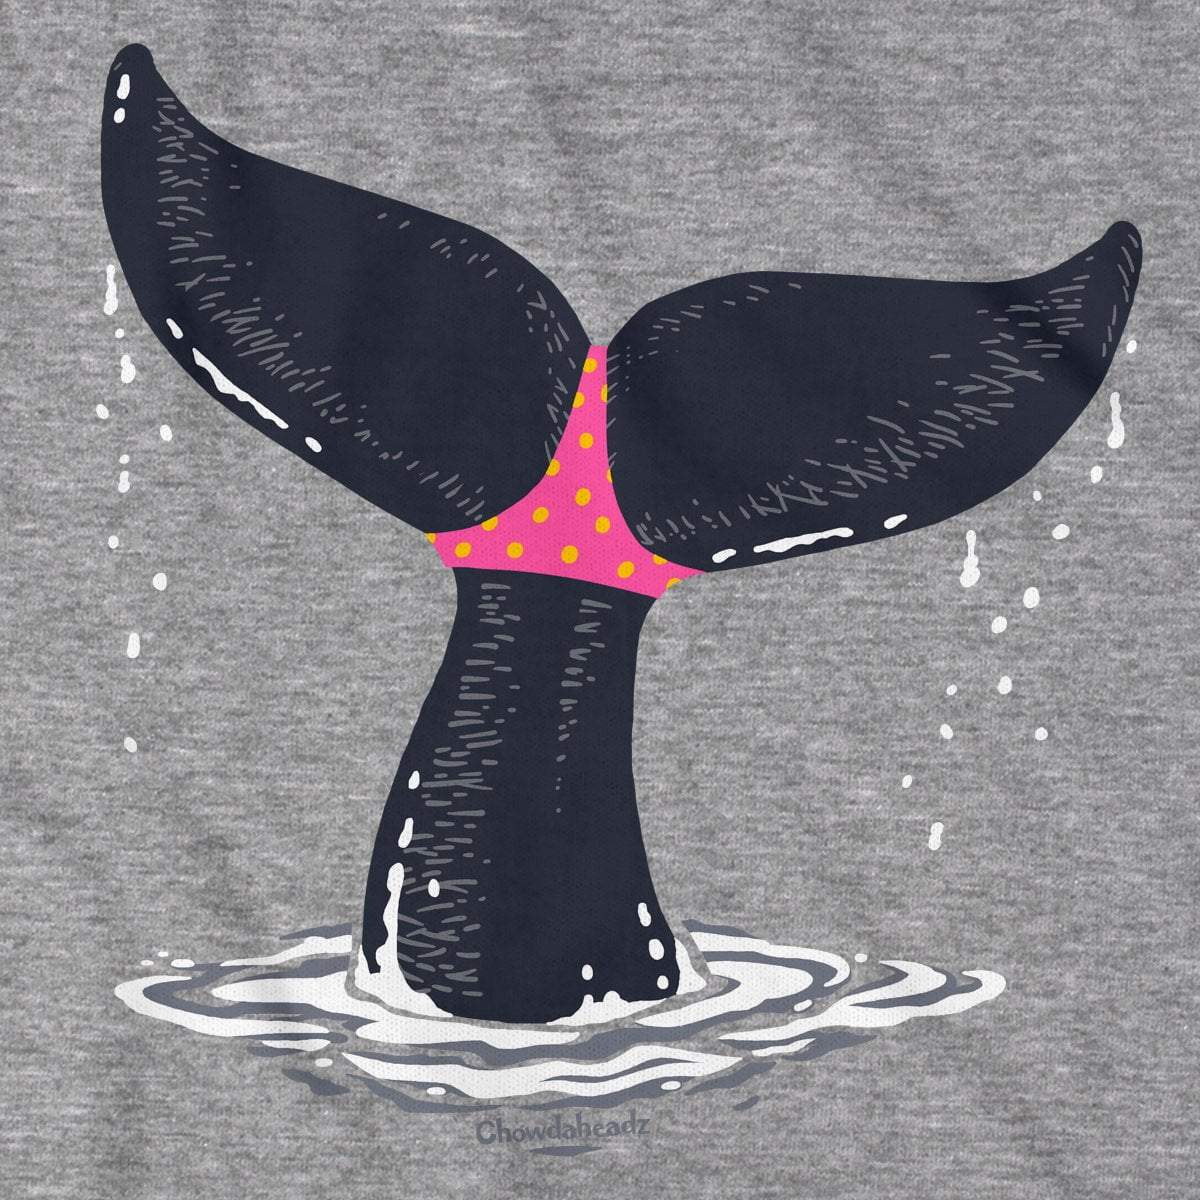 Whale Tail T-Shirt - Chowdaheadz